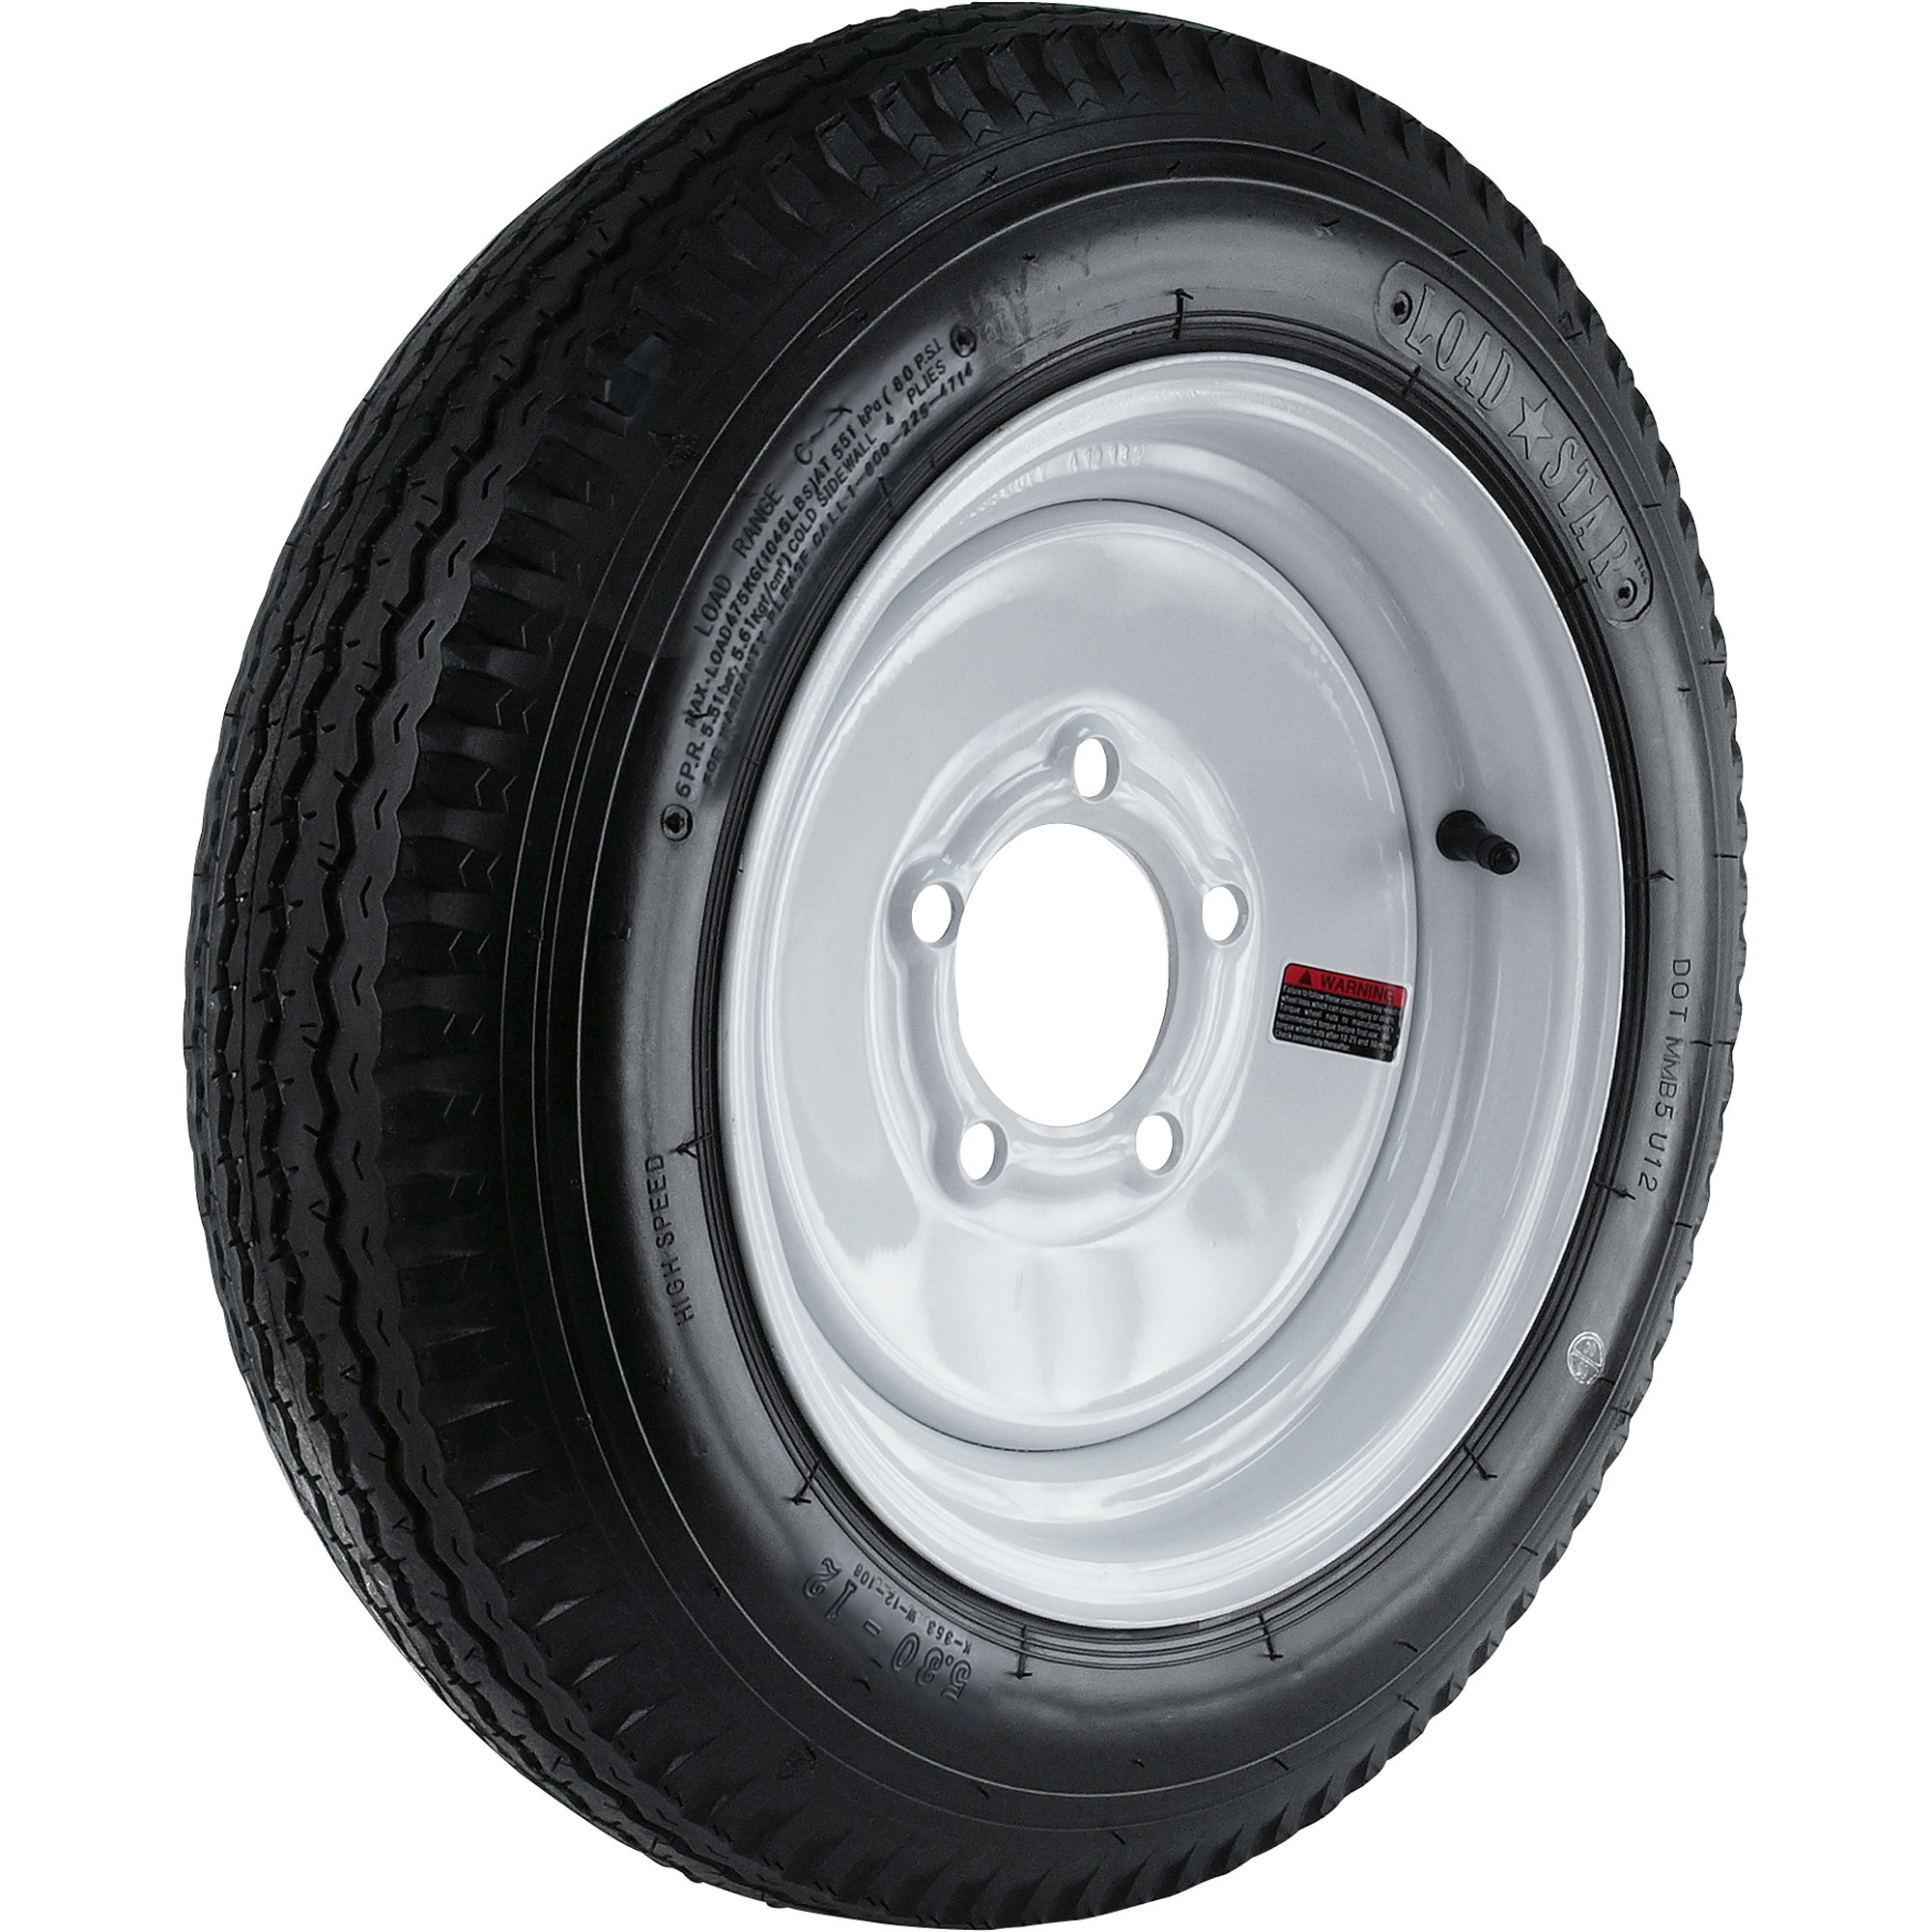 Kenda Loadstar 12Inch Bias-Ply Trailer Tire and Wheel Assembly â 21.5 x 5.30 x 12, 5-Hole, Load Range C, Model DM452C-5IN